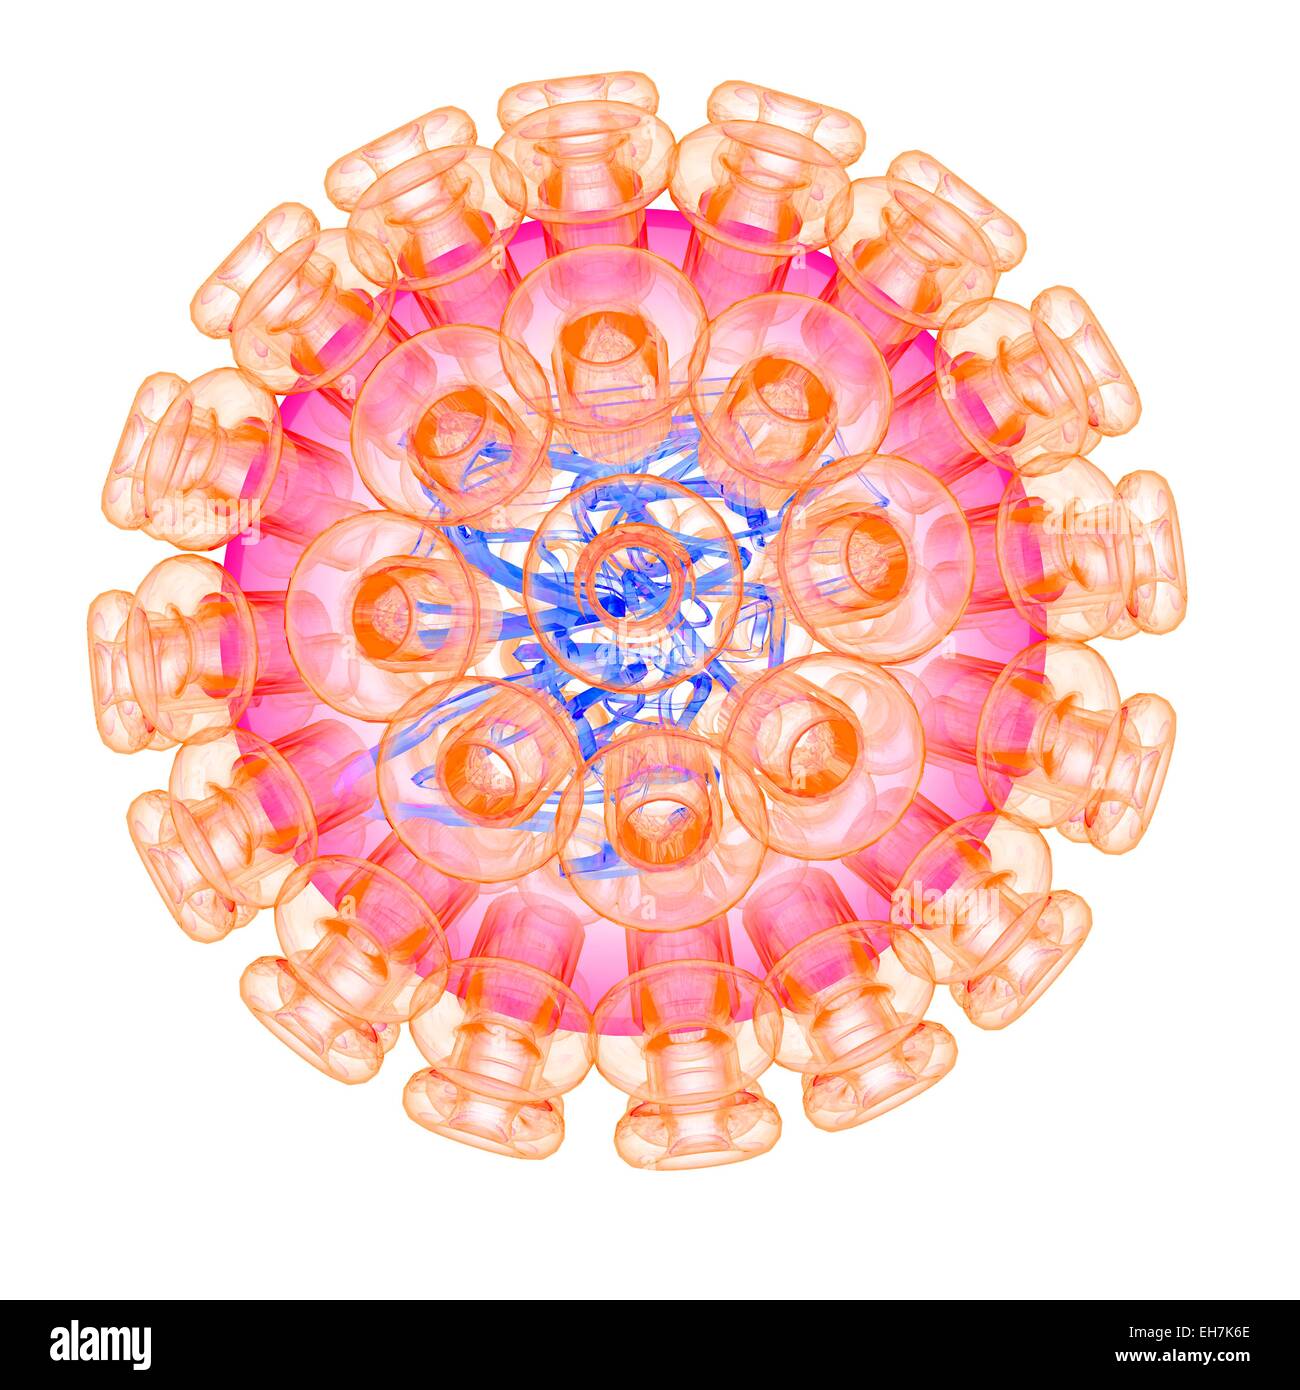 Herpes simplex type 1 virus, illustration Stock Photo